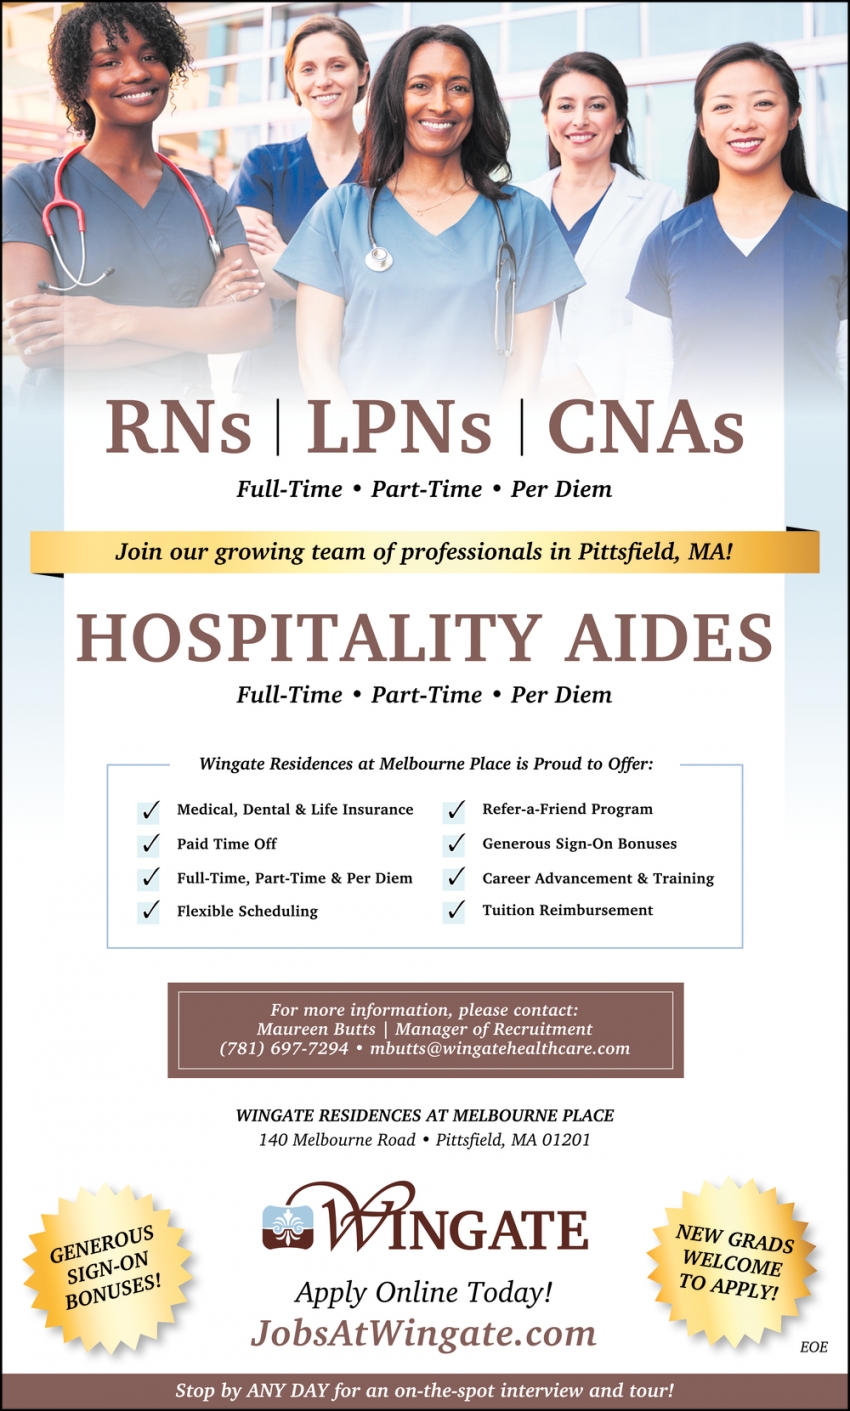 CNAs - RNs - LPNs - Hospitality Aides, Wingate Healthcare, Needham, MA